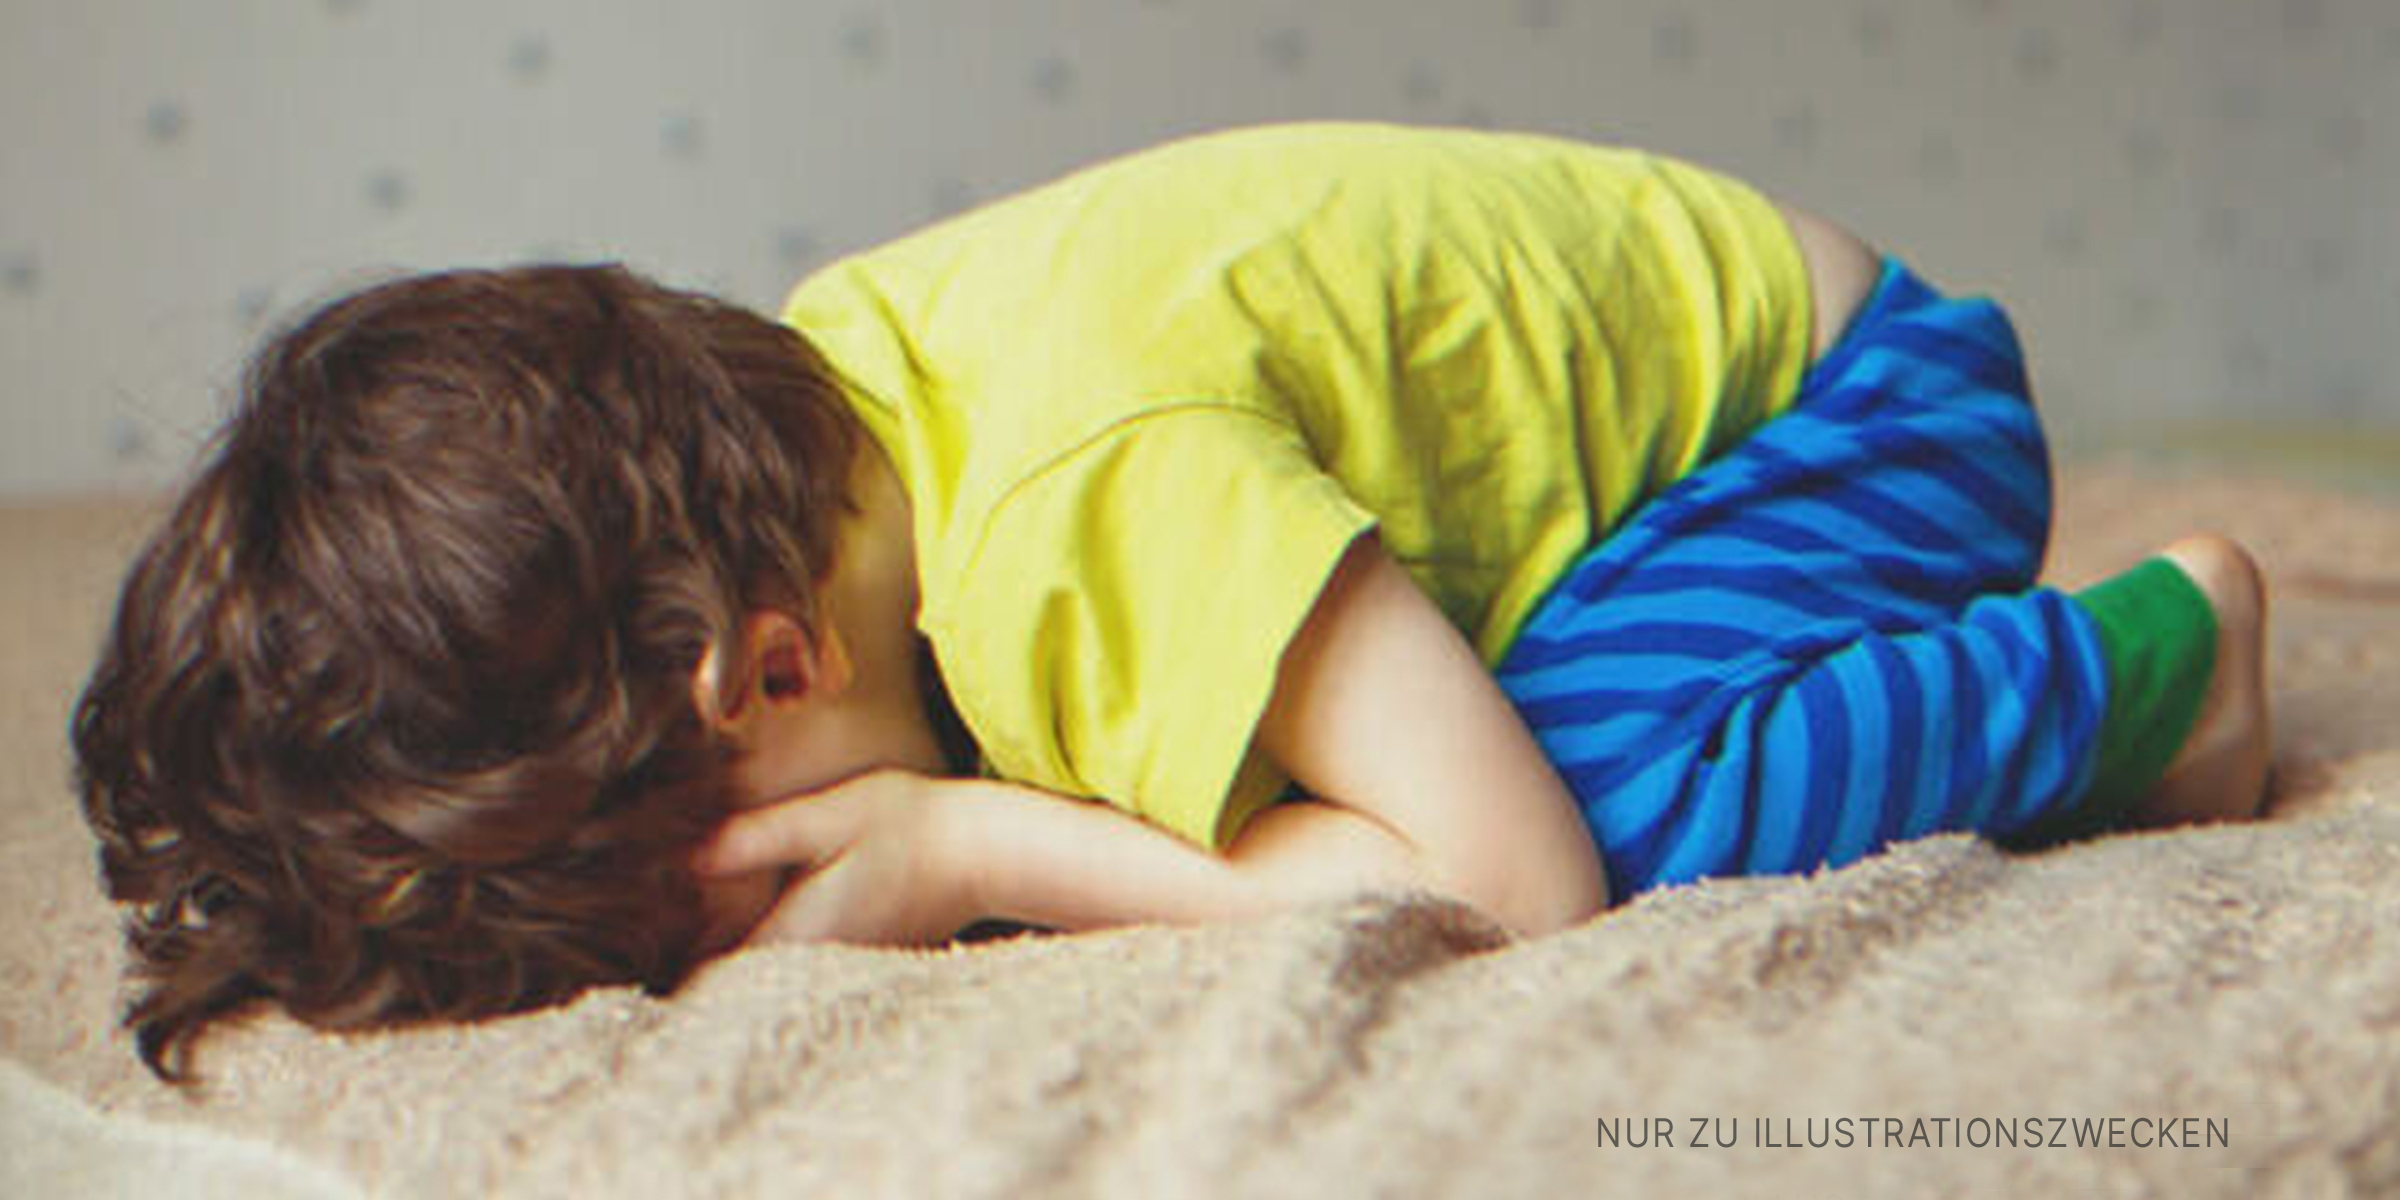 Junge weint im Bett. | Quelle: Shutterstock